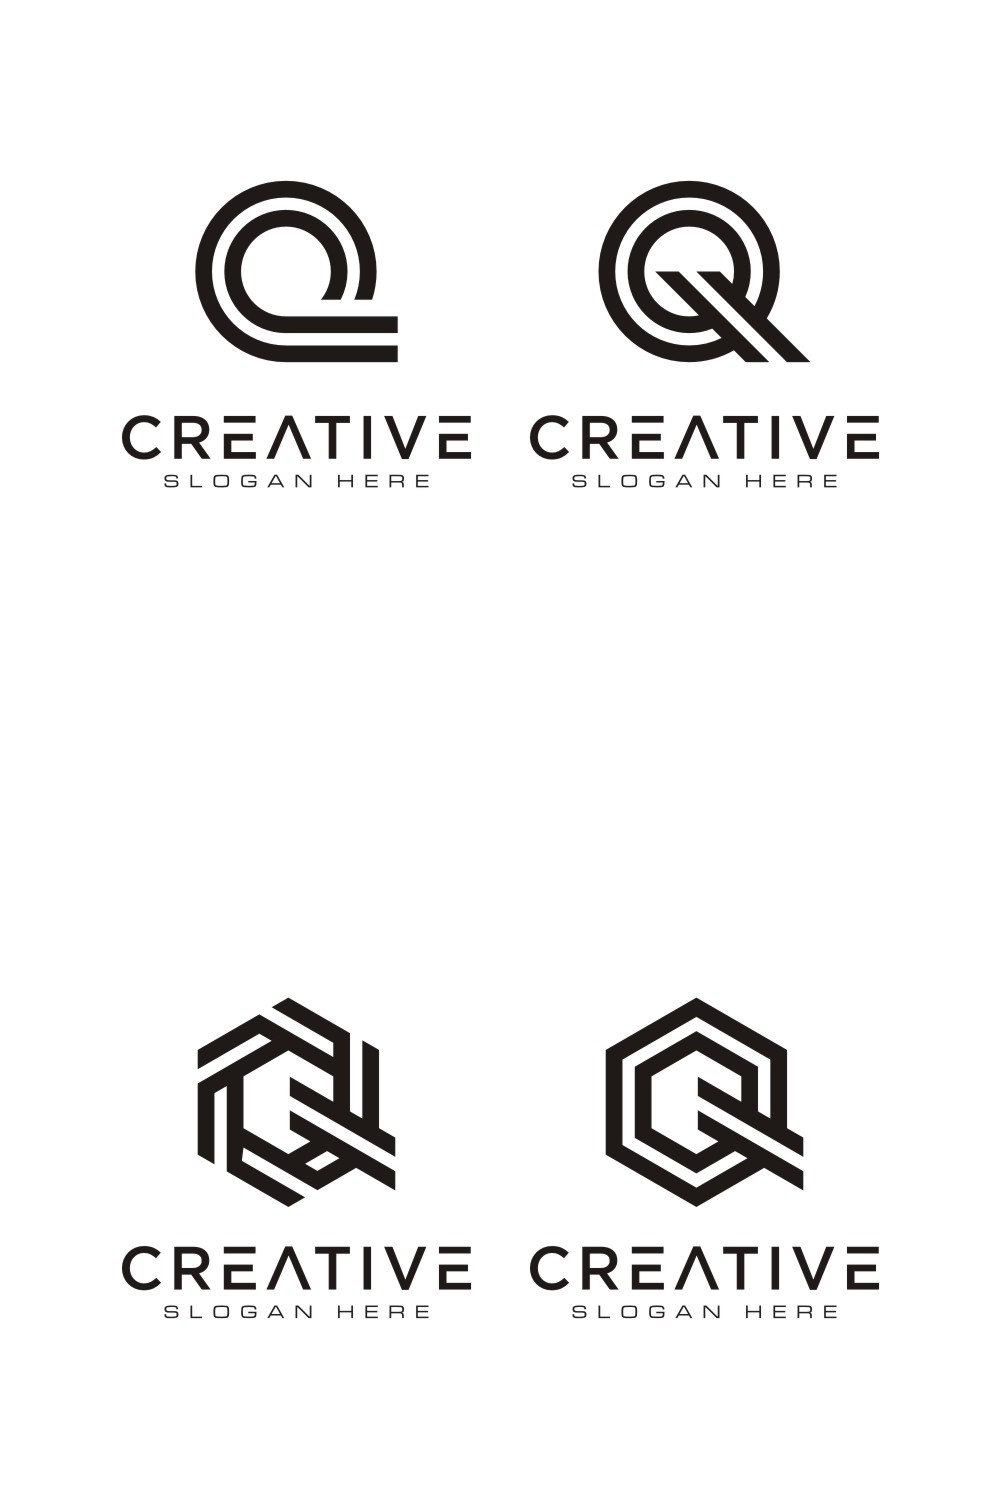 Set of Initial Letter Q Logo Design Vector pinterest image.